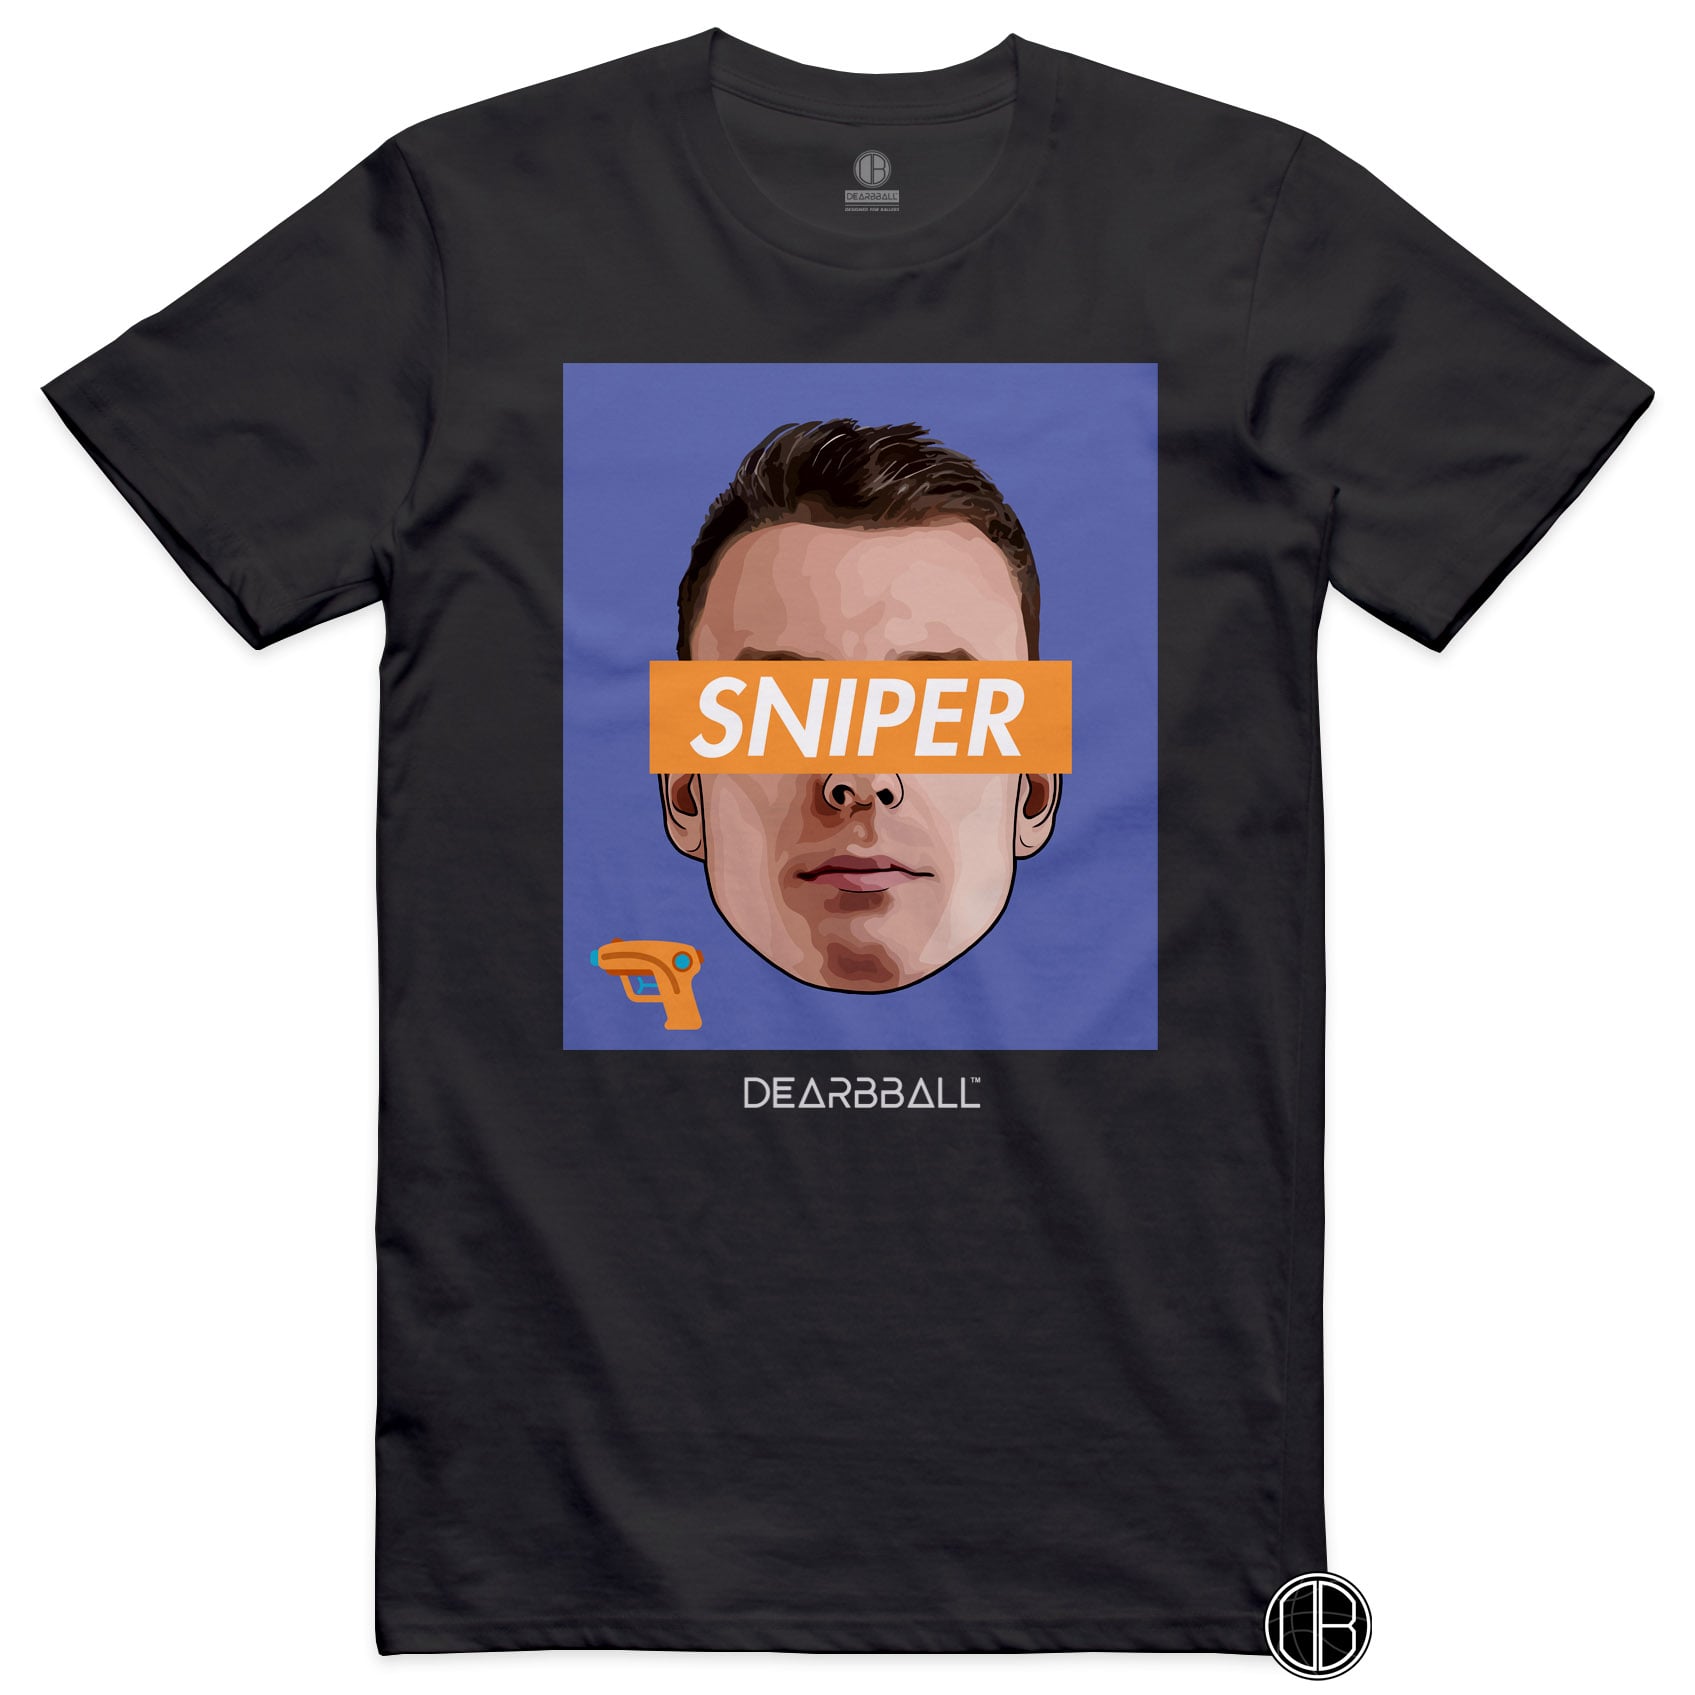 [ENFANT] DearBBall T-Shirt - SNIPER Orange Edition